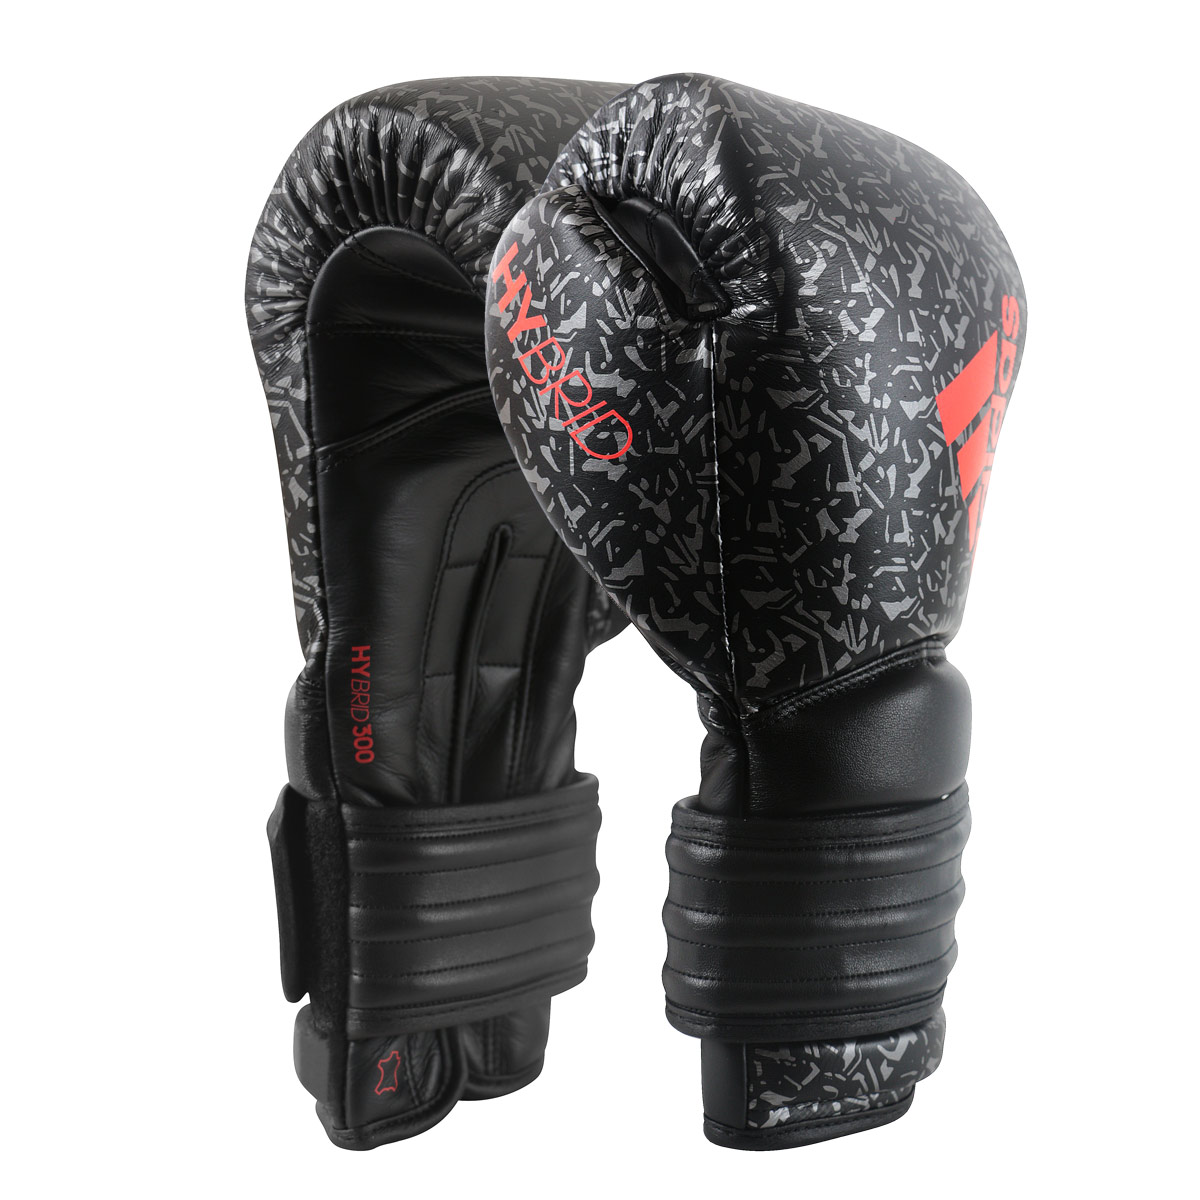 Adidas Hybrid 300 Pro Boxing Gloves 12oz Black Ltd Edition-AAG_001185